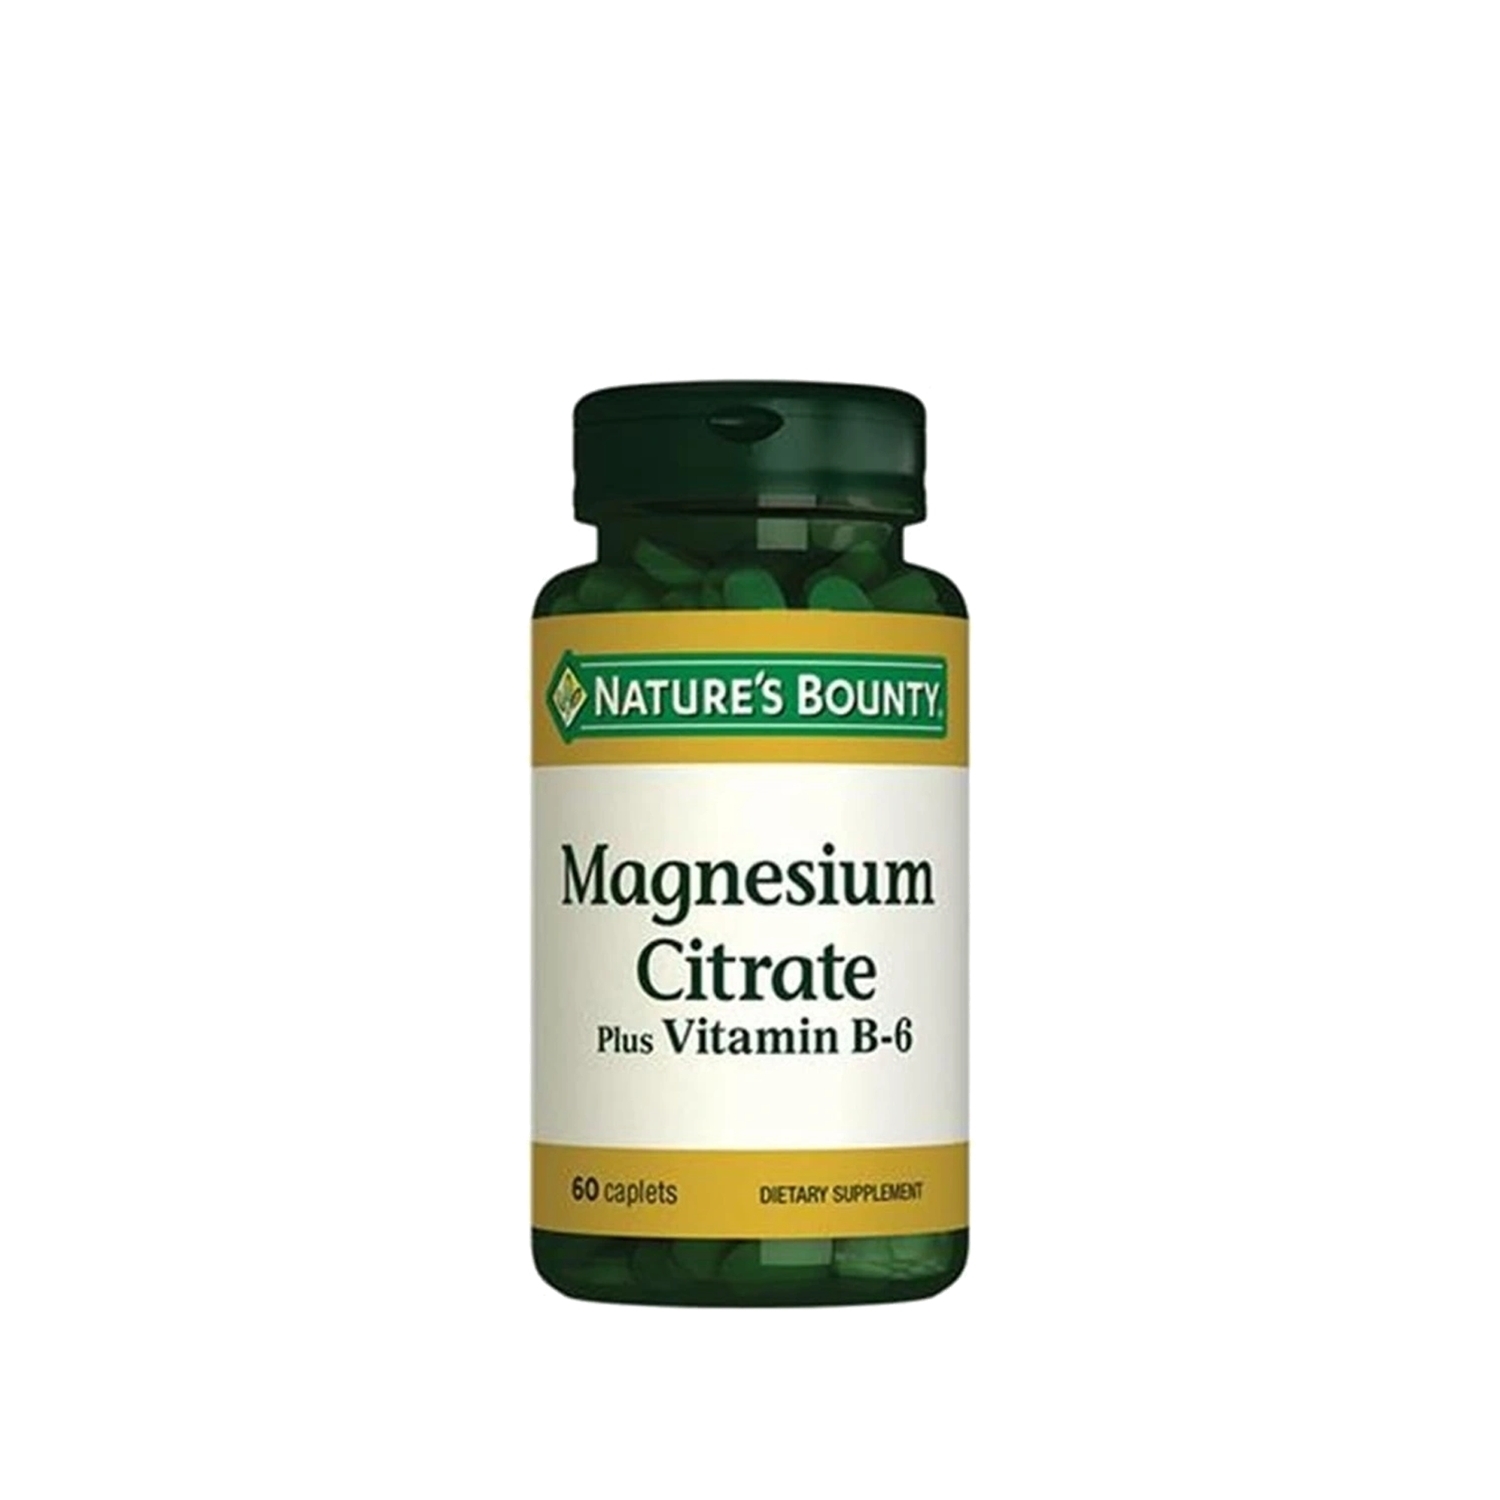 Nature's Bounty Magnesium Citrate Plus Vitamin B-6 60 Tablet